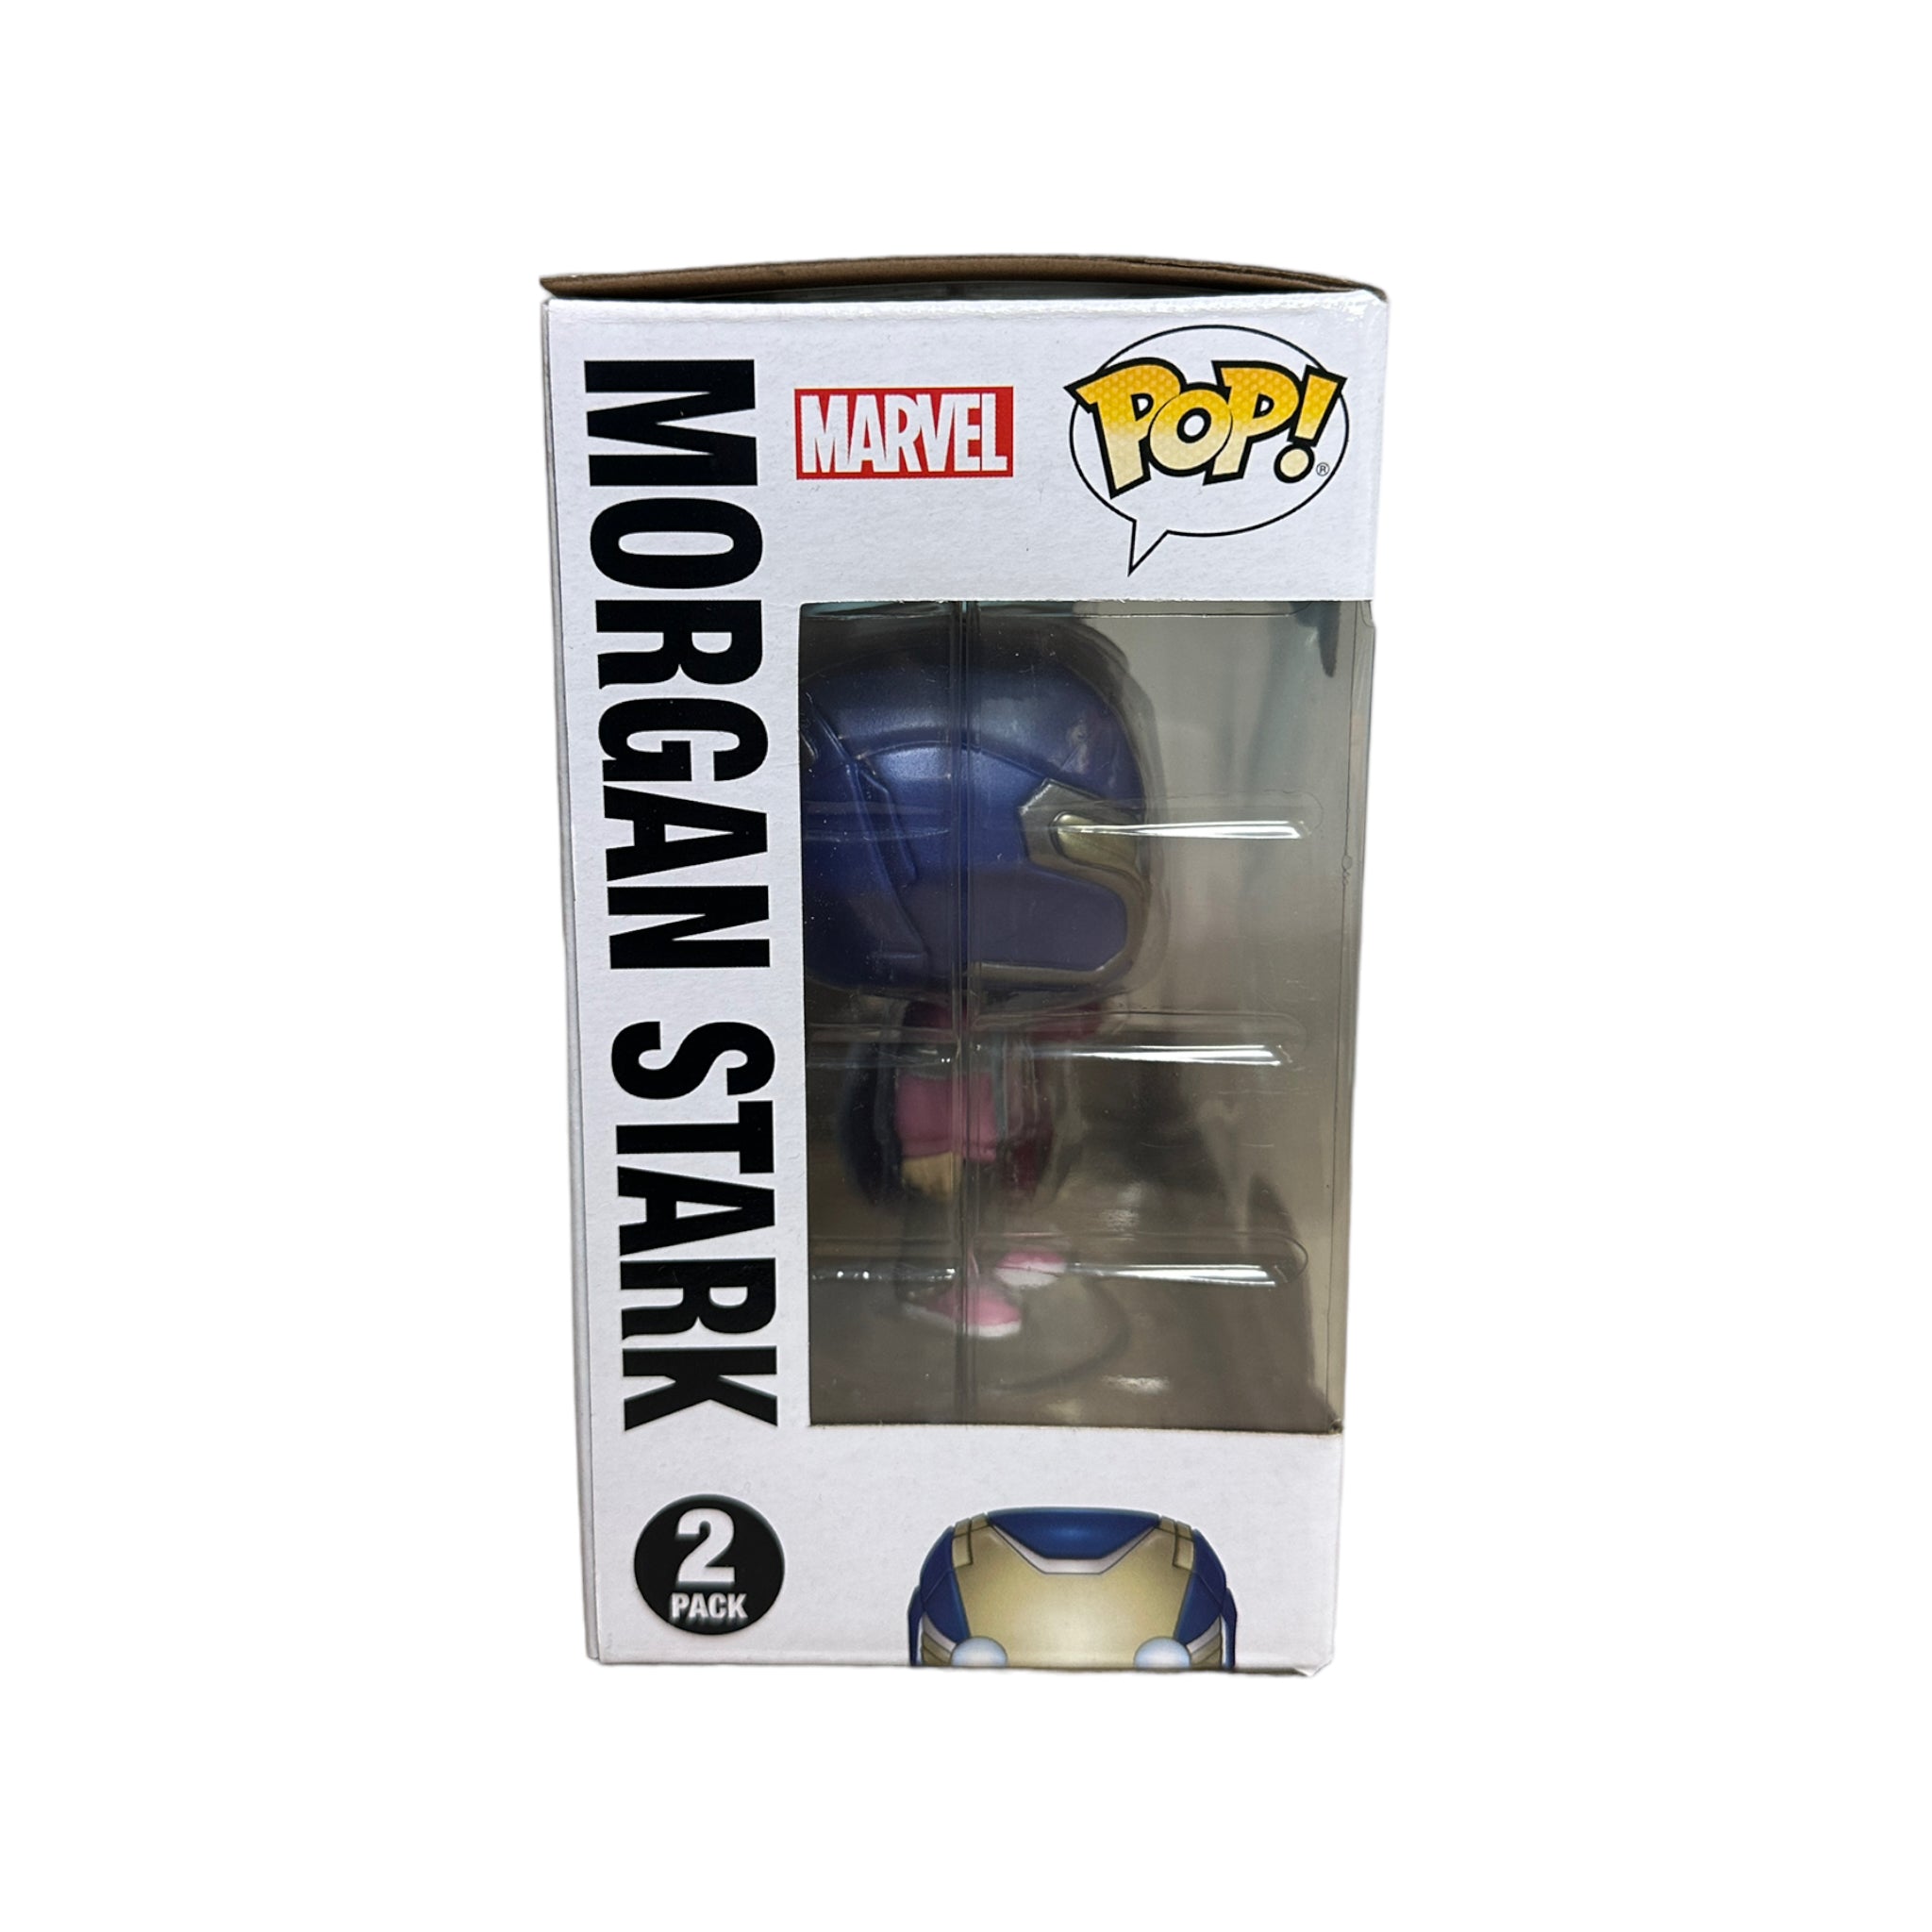 Morgan Stark & Tony Stark 2 Pack Funko Pop! - Avengers: Endgame - Pop In A Box Exclusive - Condition 8.75/10